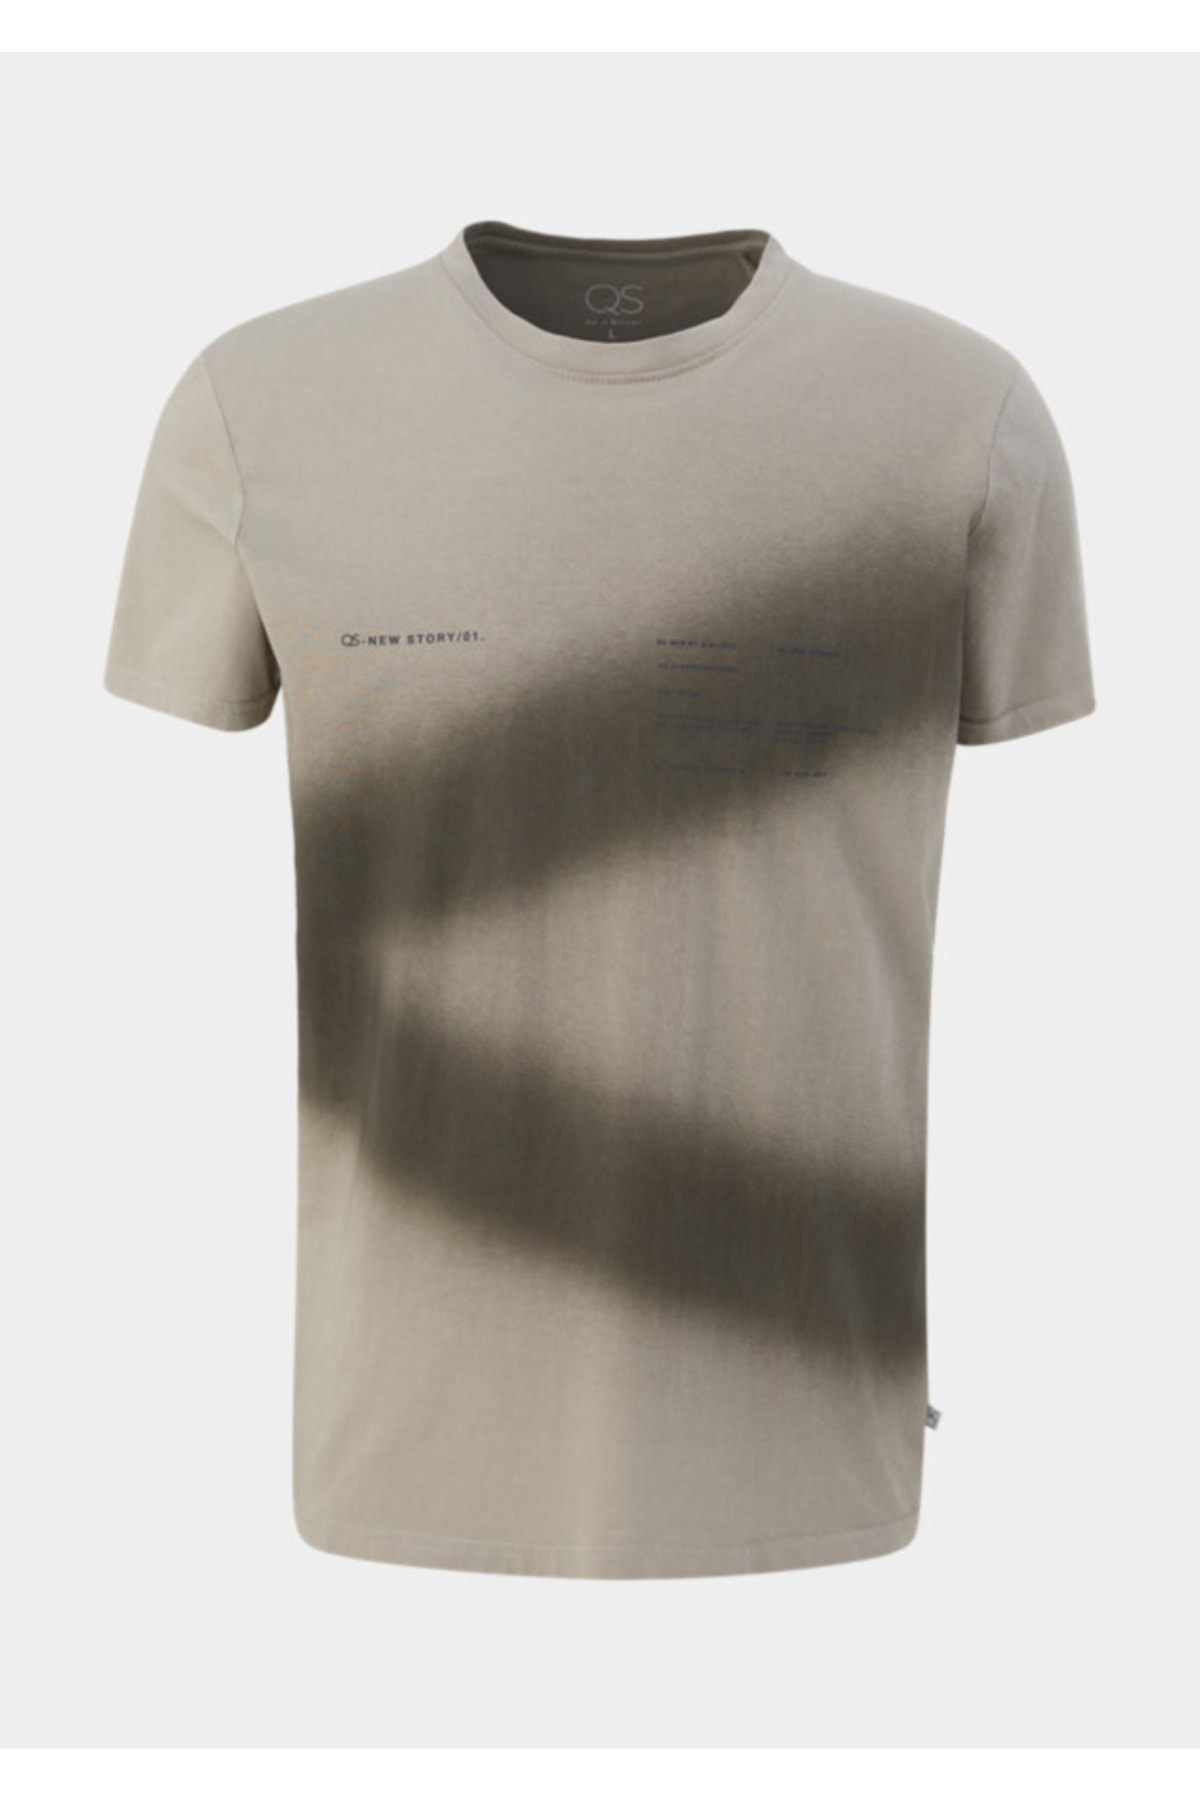 QS by s.Oliver T-Shirt Mehrfarbig Regular Fit Fast ausverkauft